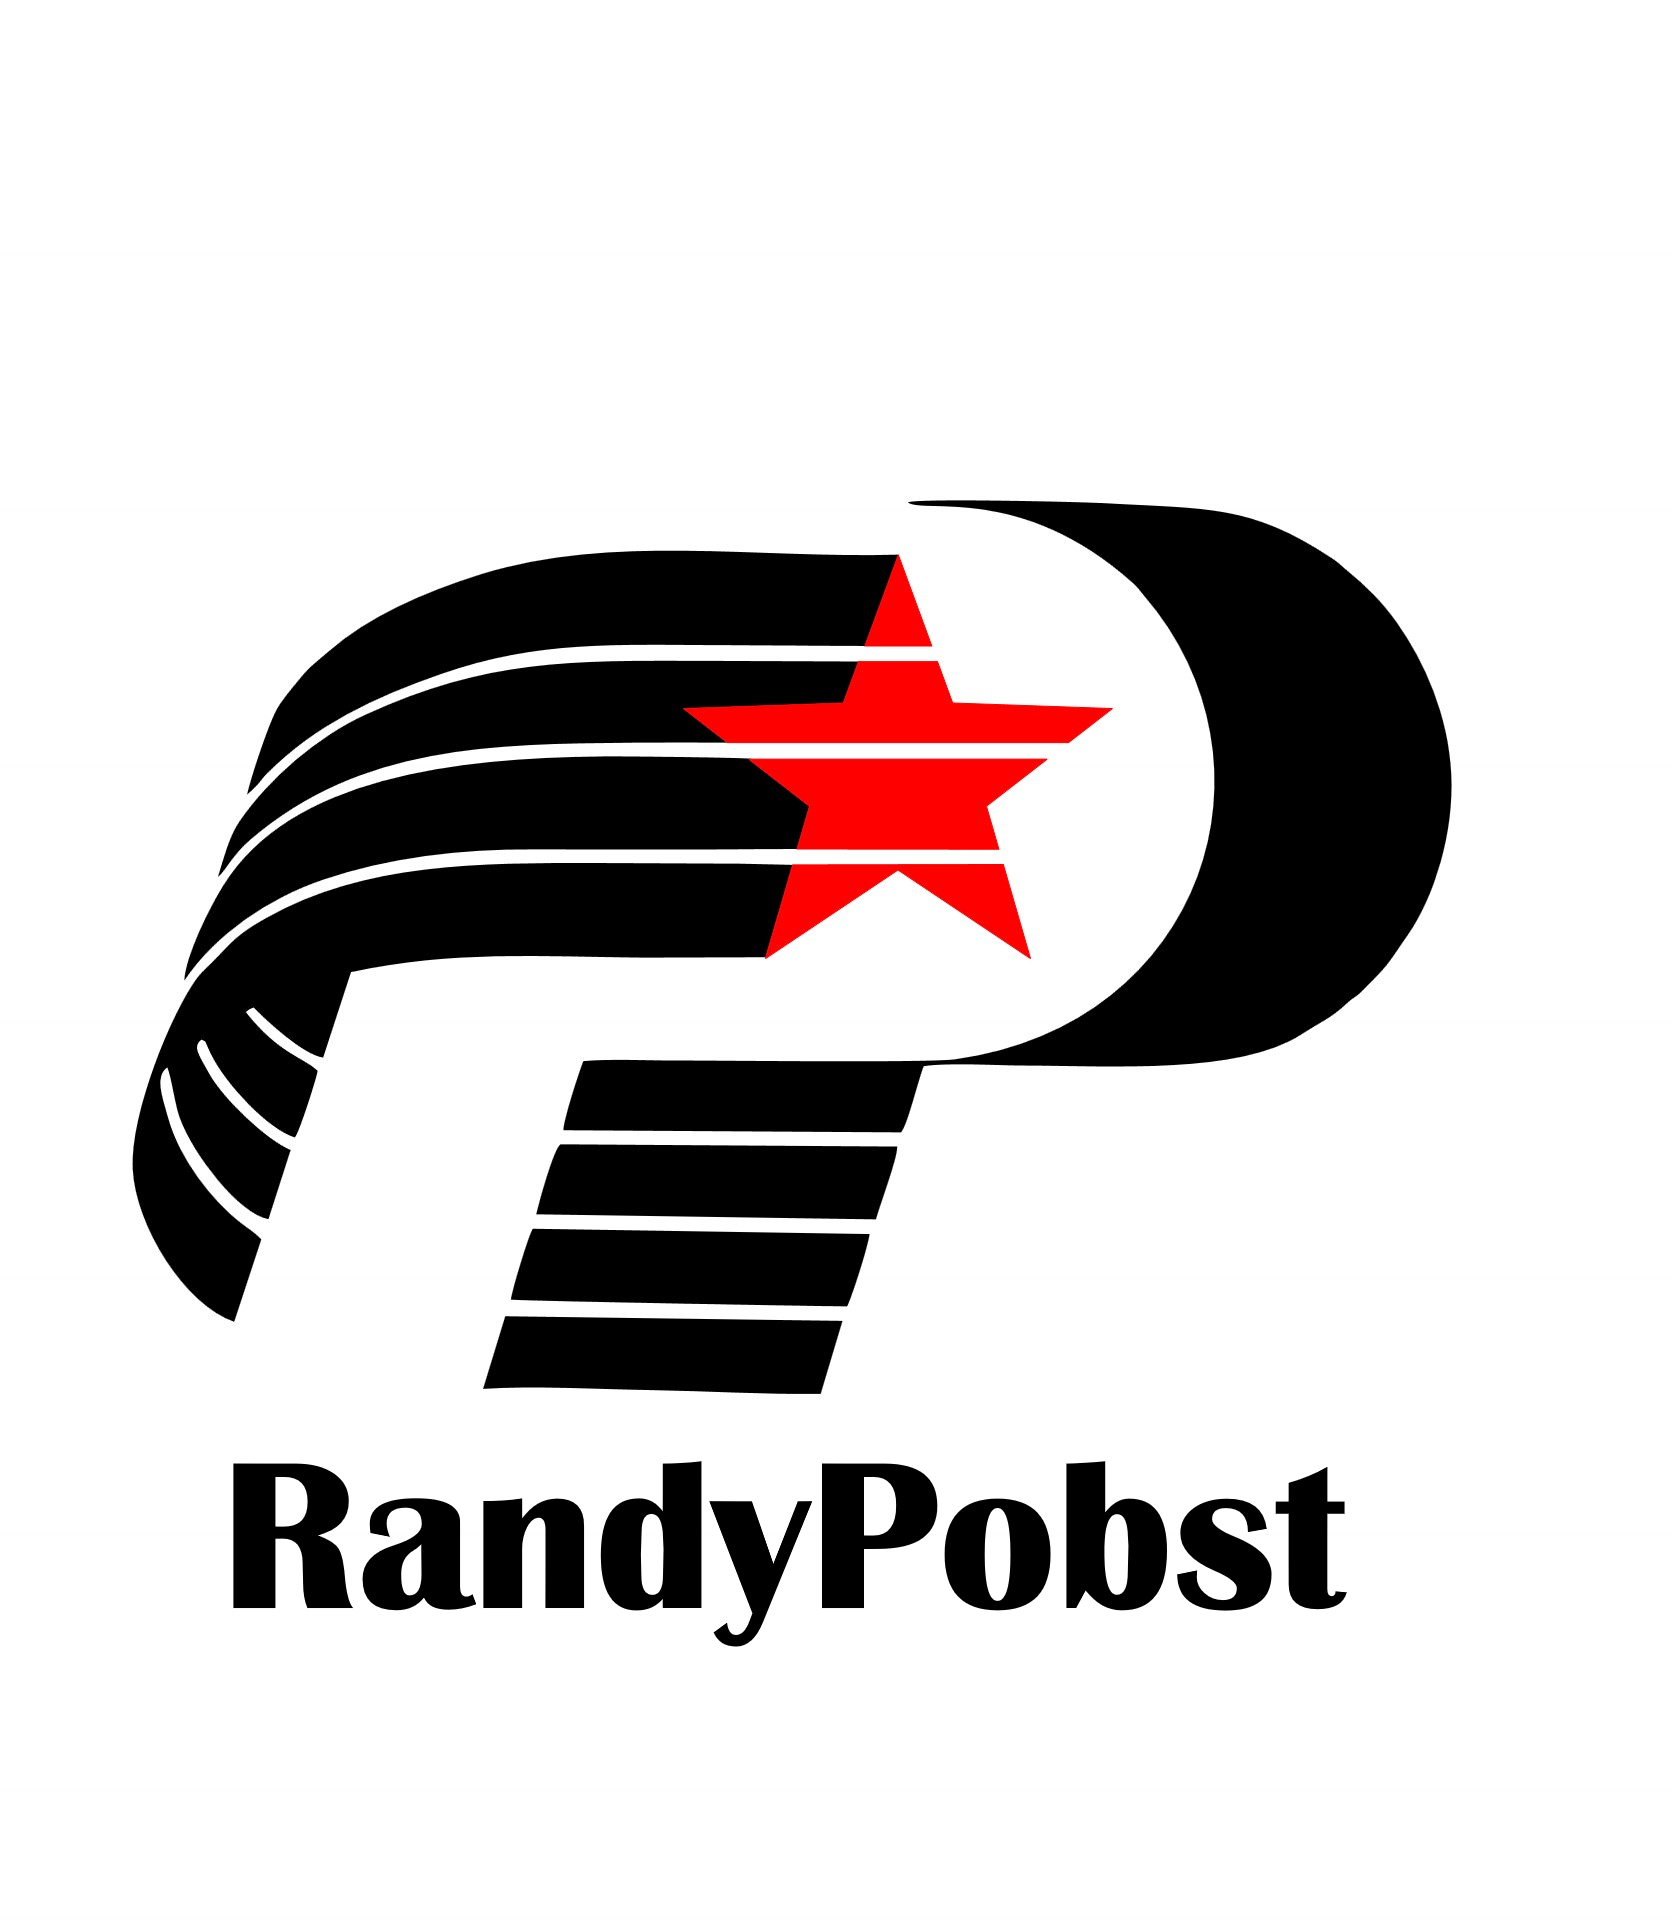 Randy Pobst